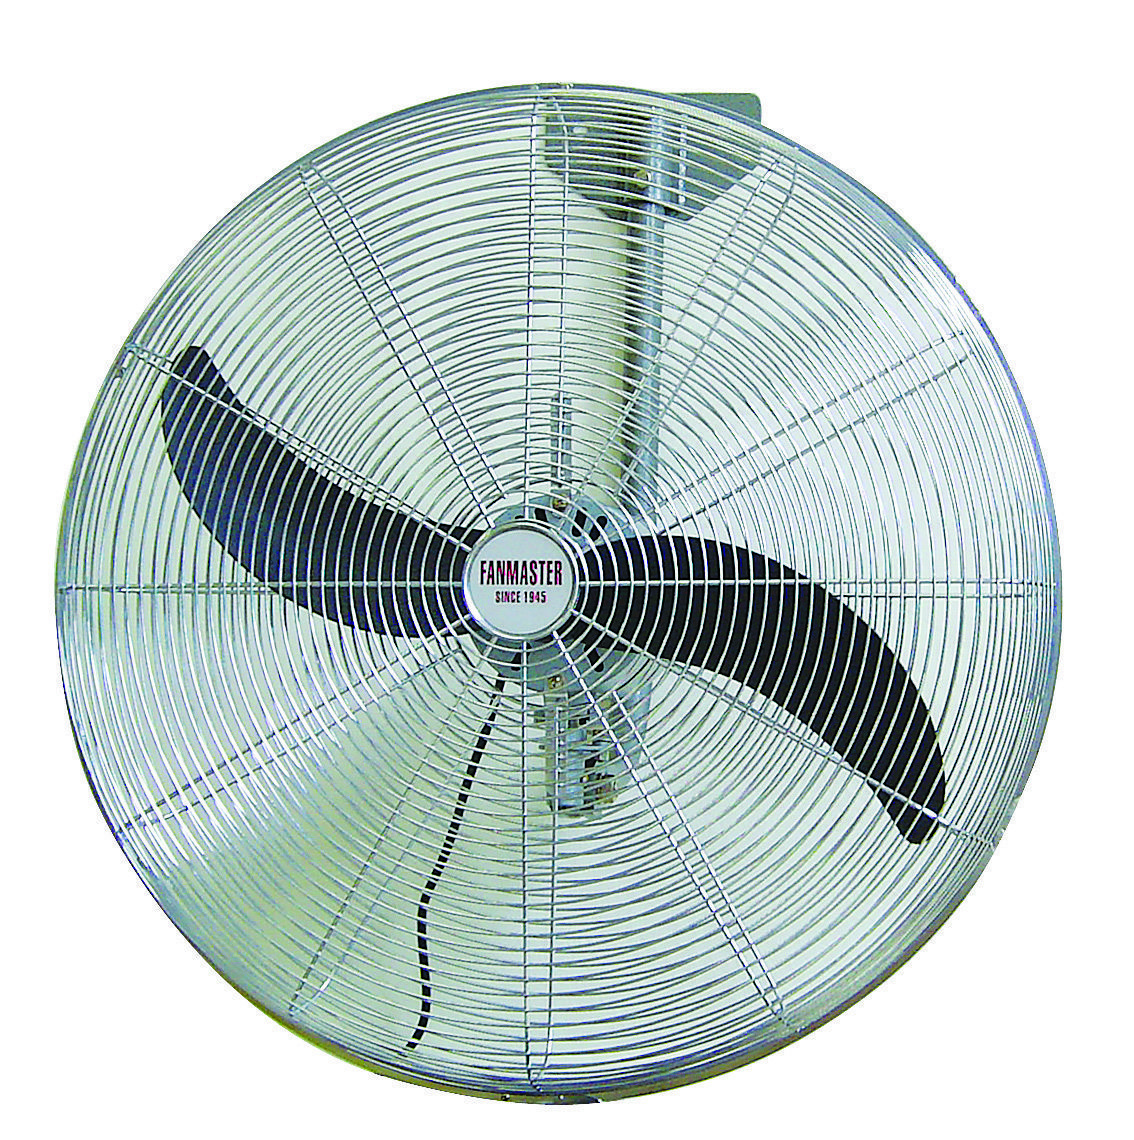 WALL MT FAN 500MM 240V 3SPD / Industrial Heating Cooling Ventilation Distribution Fans Warehouse Australia / Fanmaster